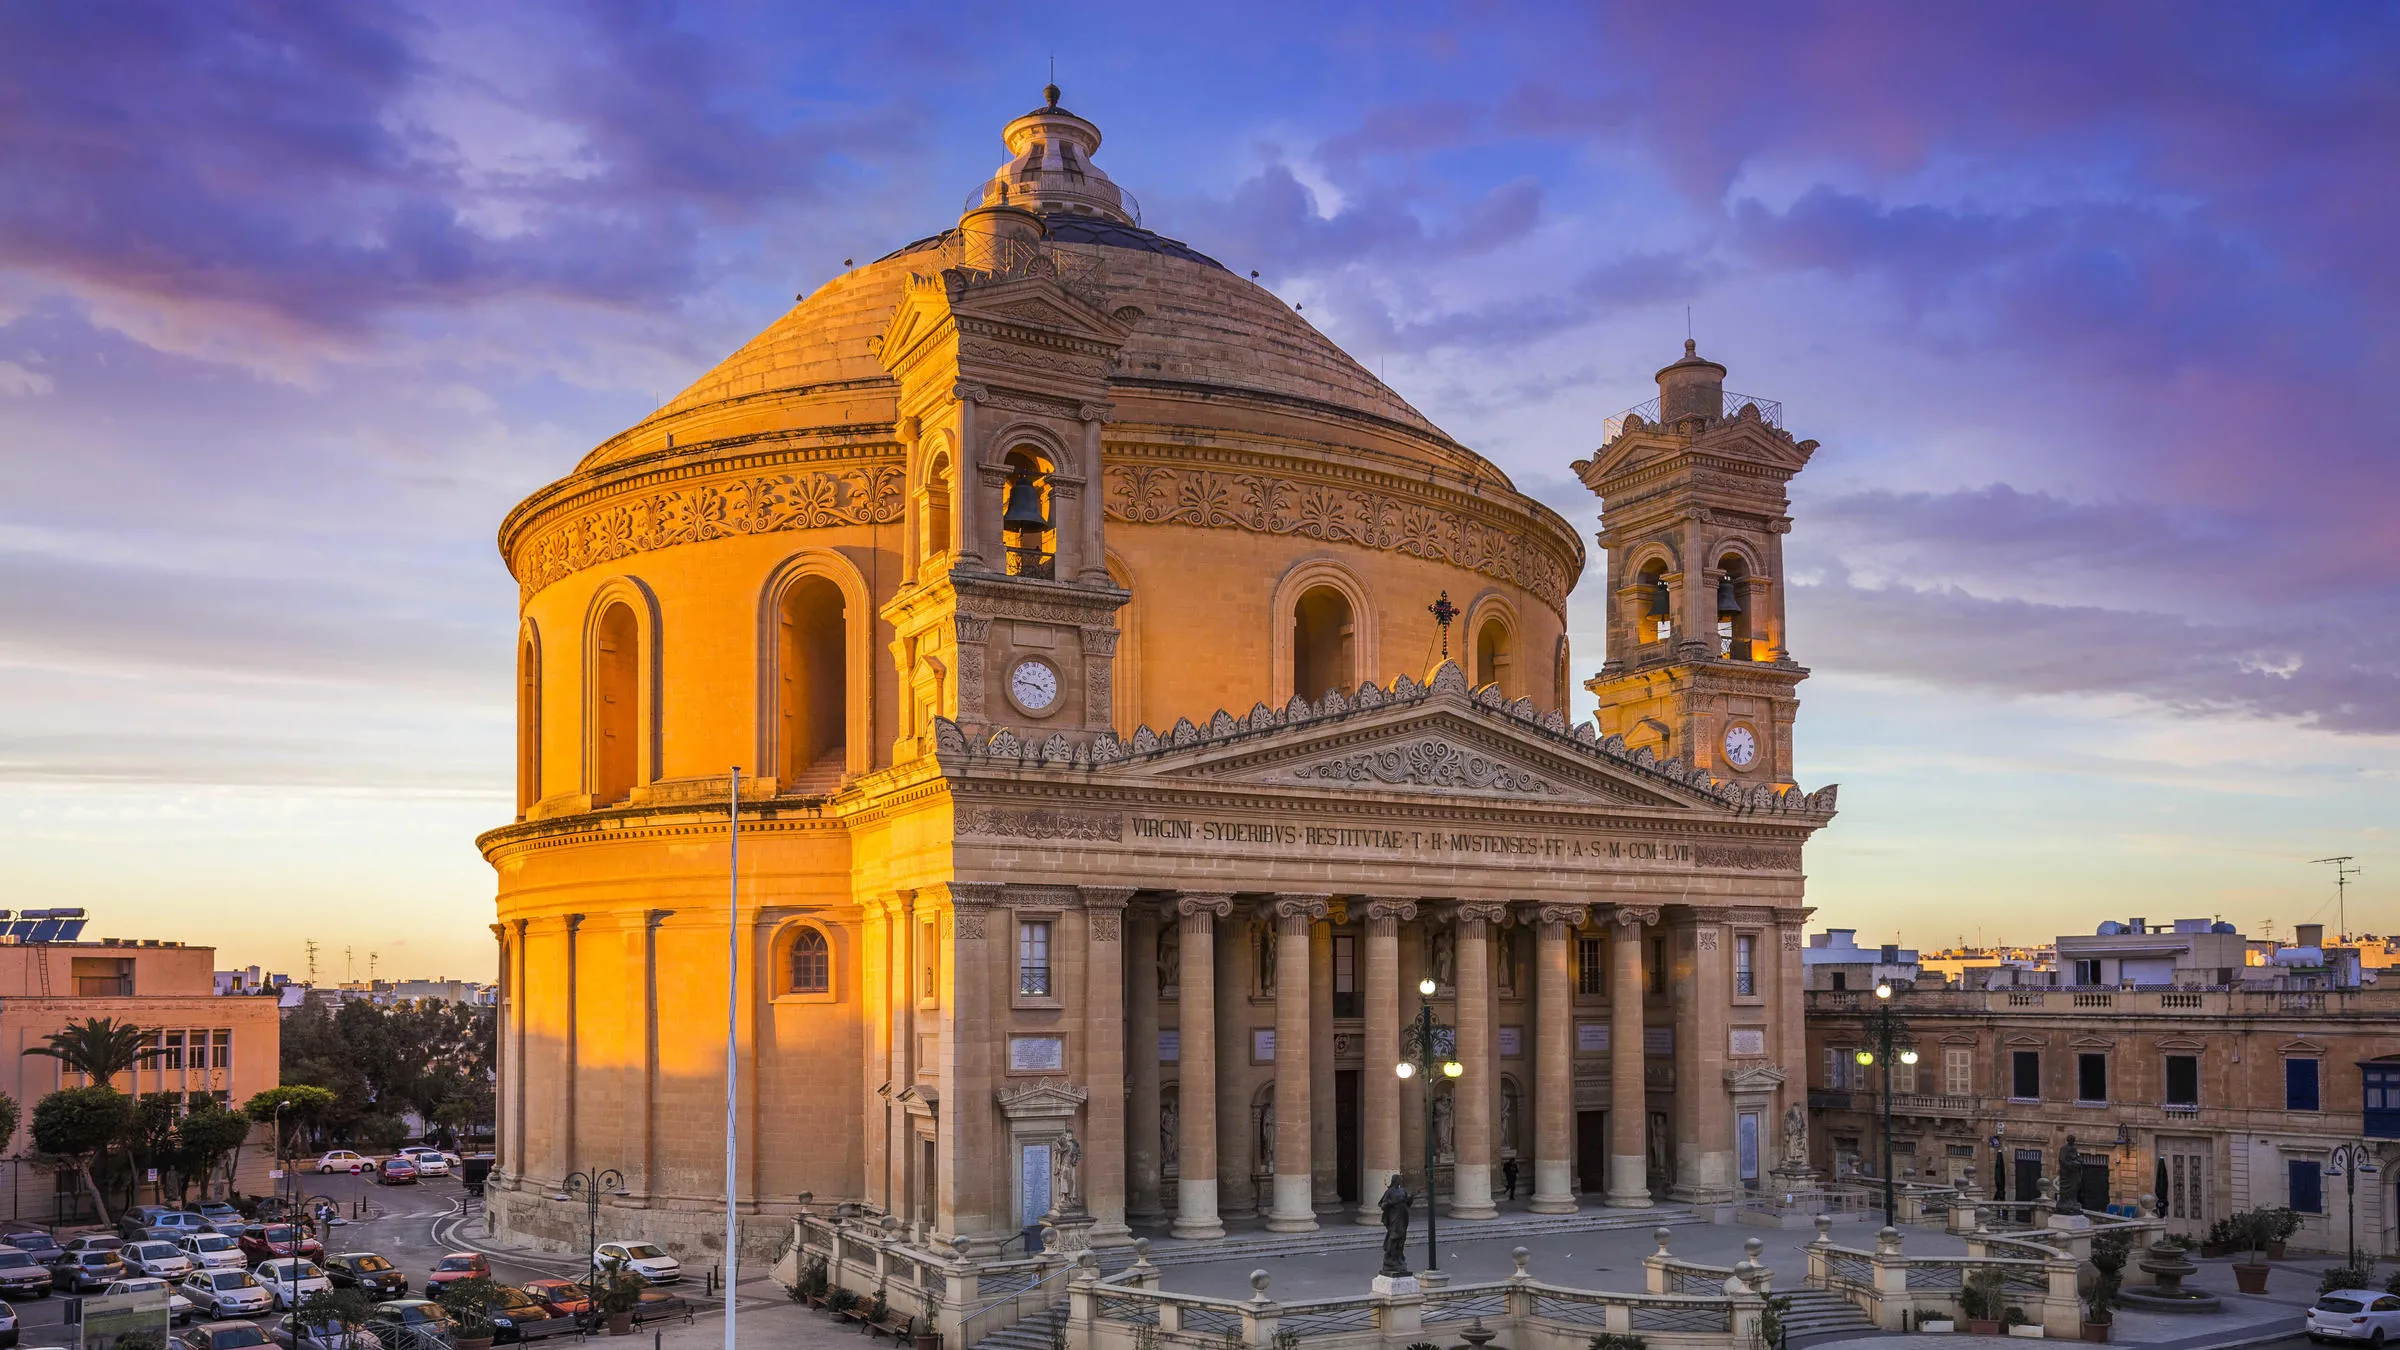 Rotunda Mosta in Malta, Europe | Architecture - Rated 4